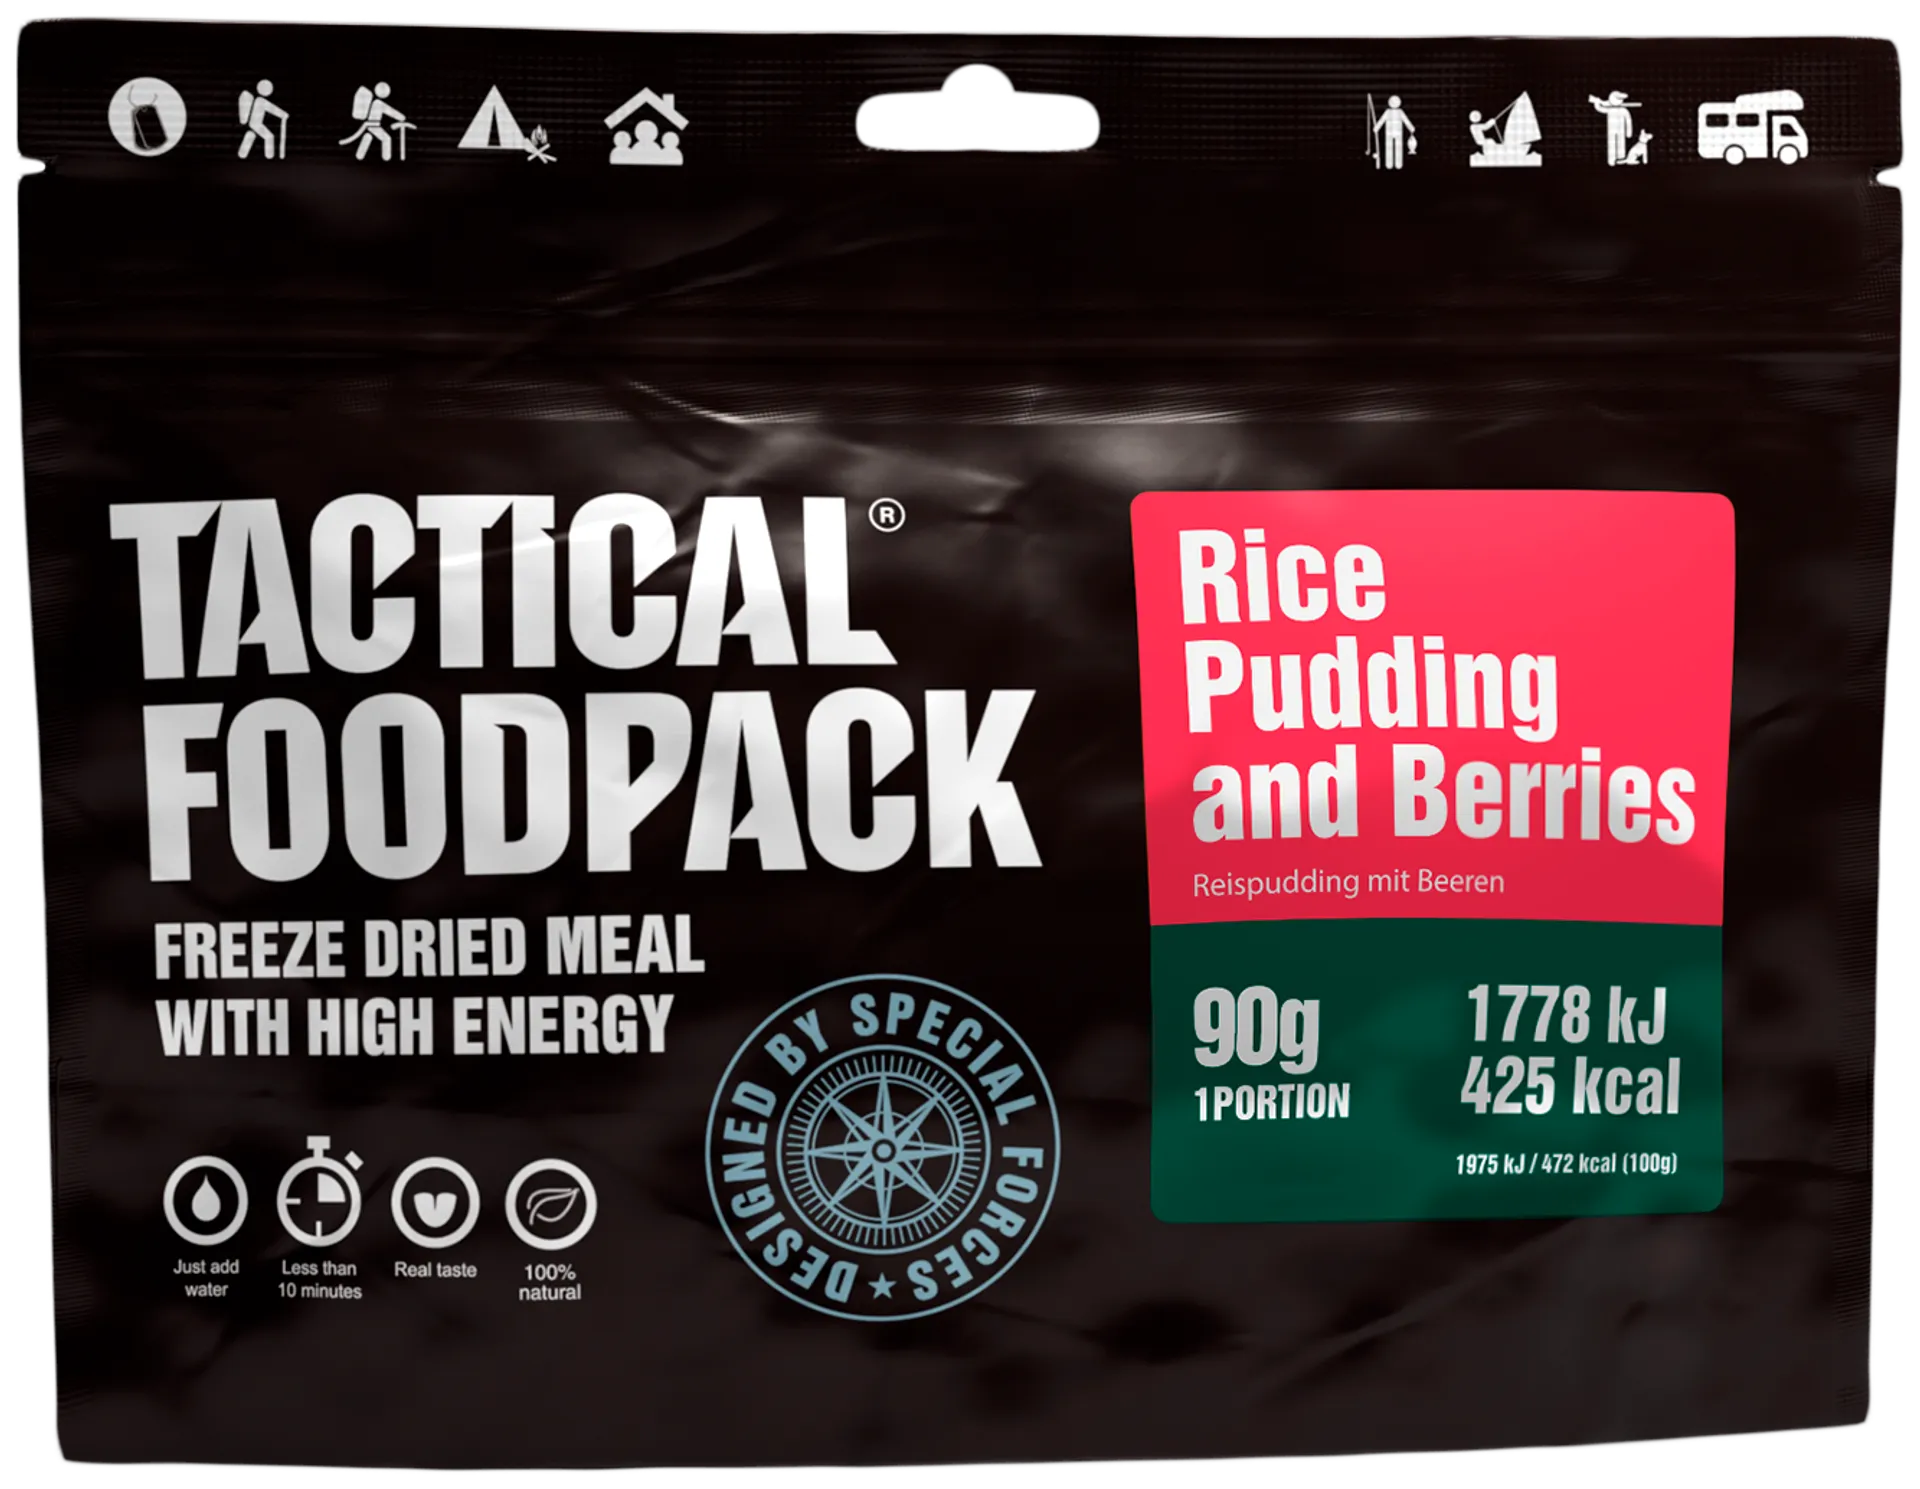 Tactical Foodpack riisipuuro vadelmilla